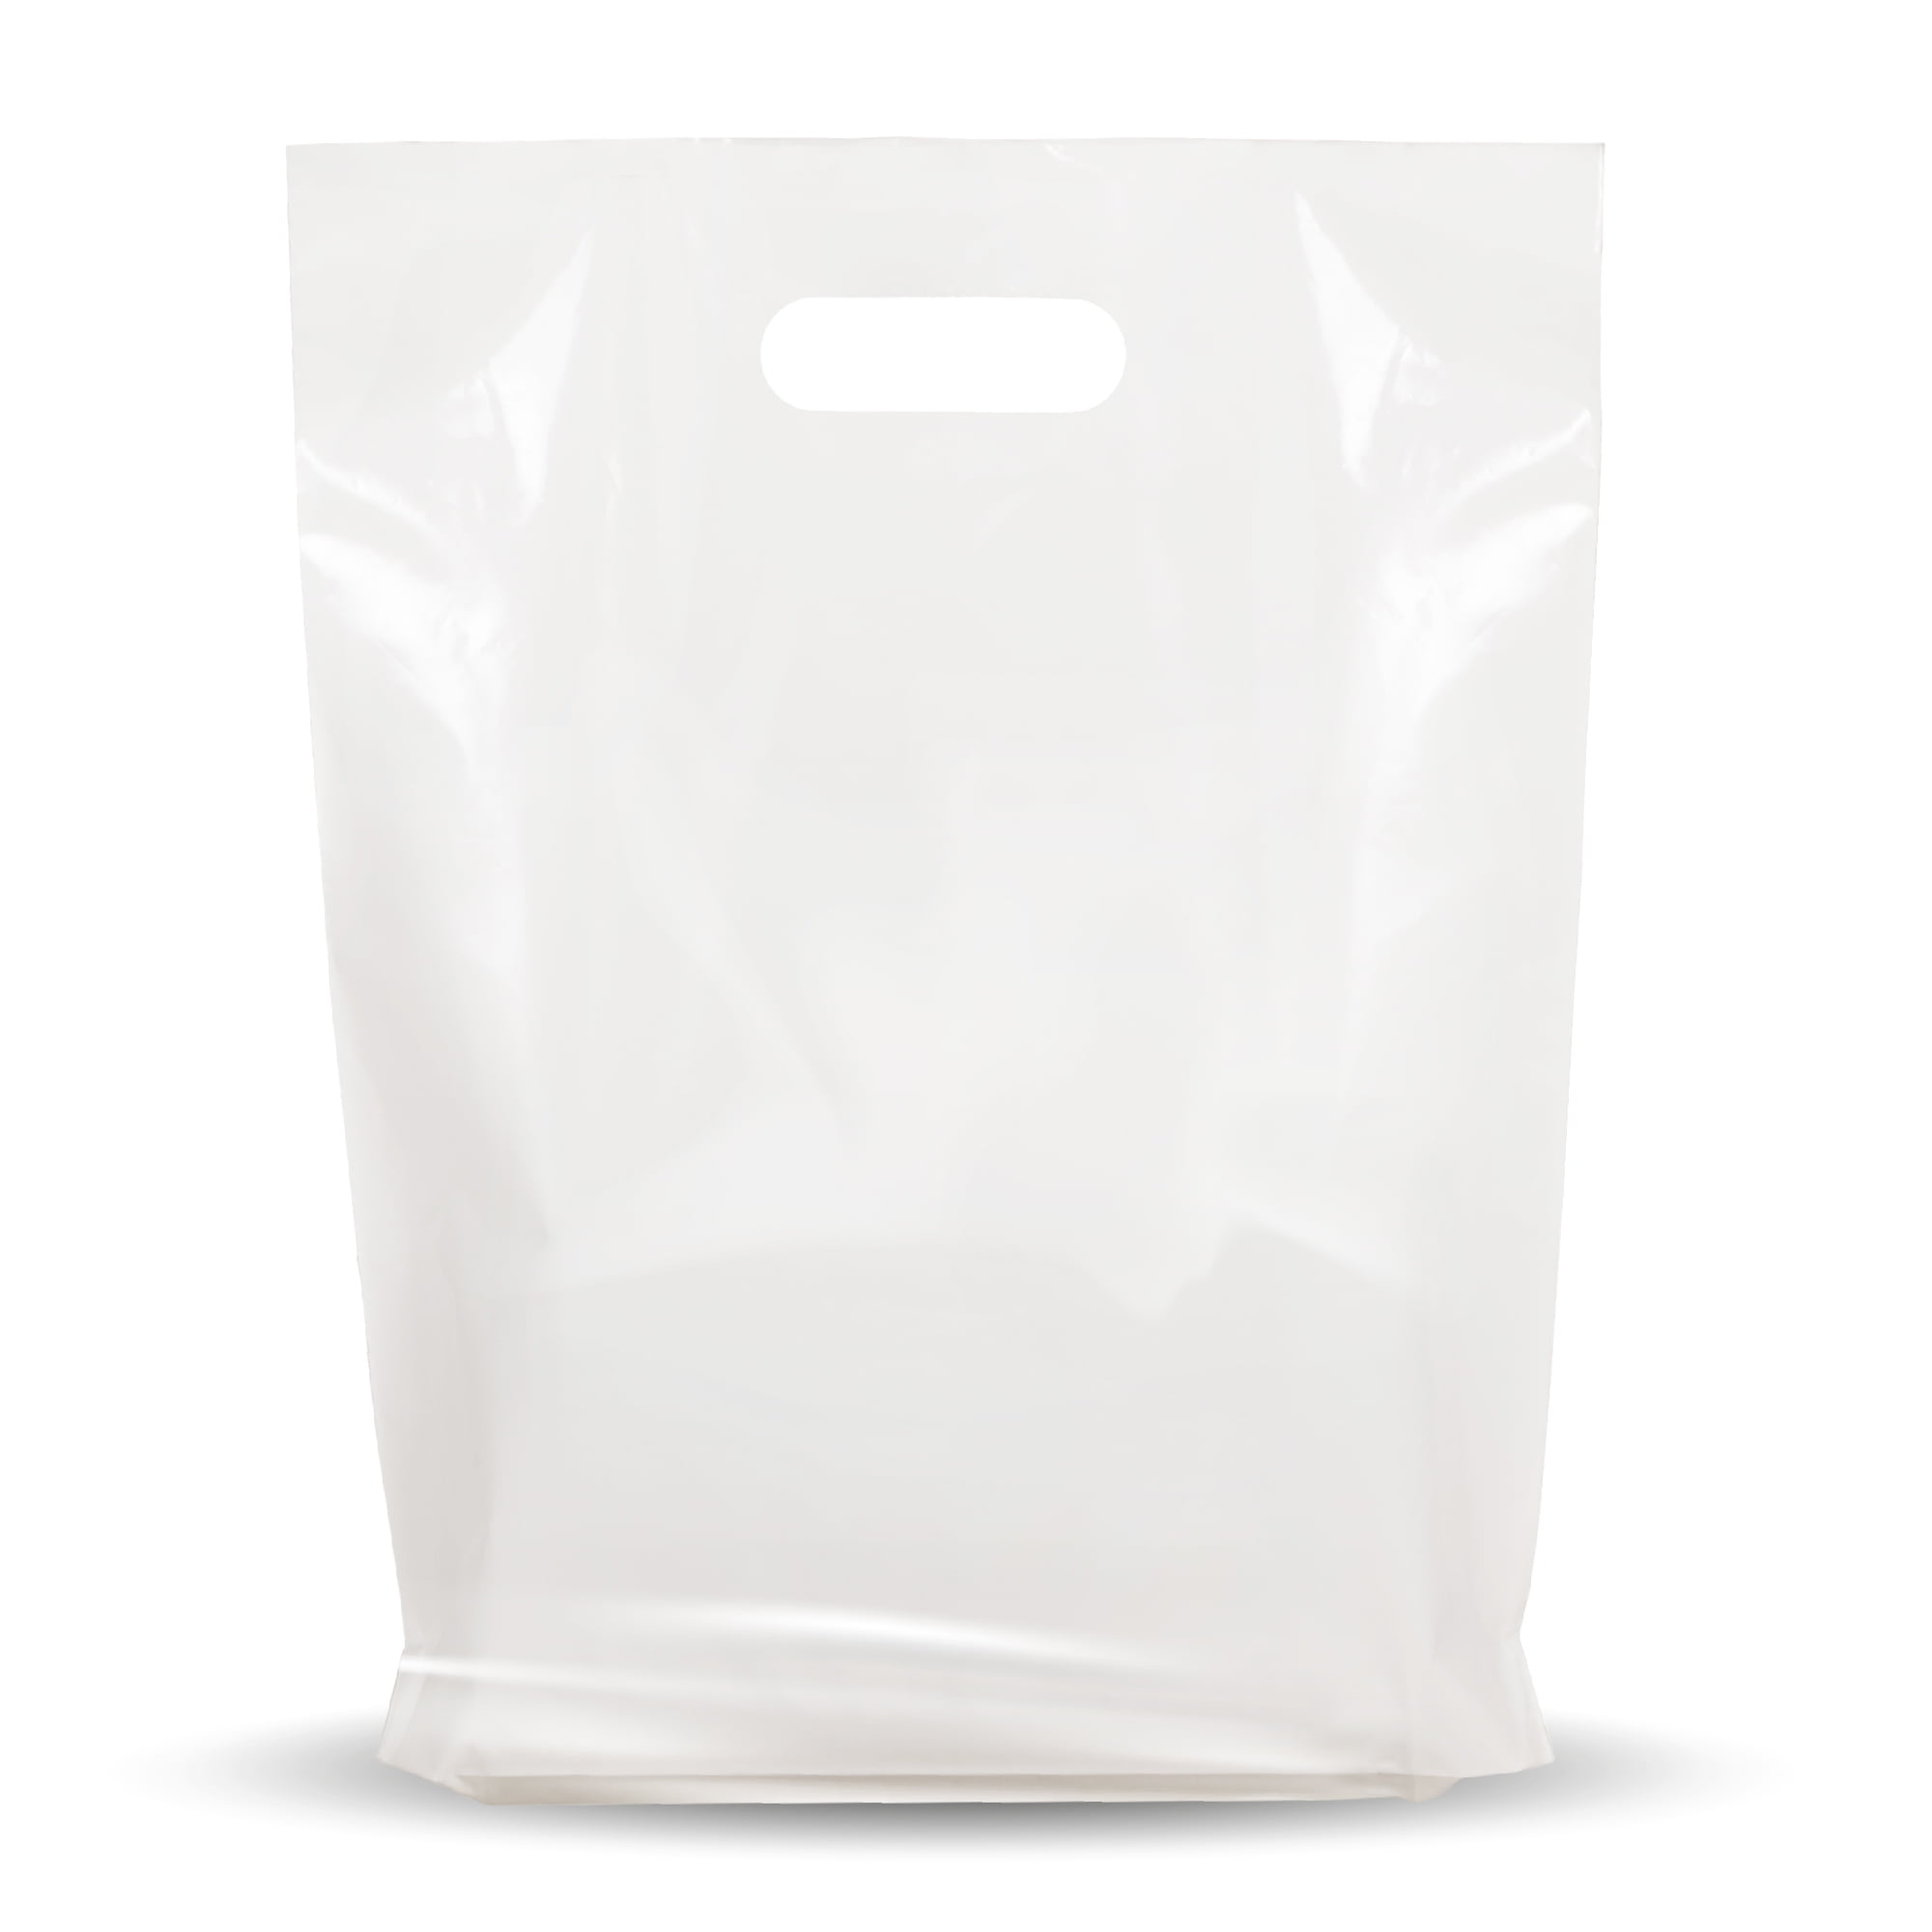 Count of 1000 New Retail Medium Gray Low Density Merchandise Bag 12 x 15